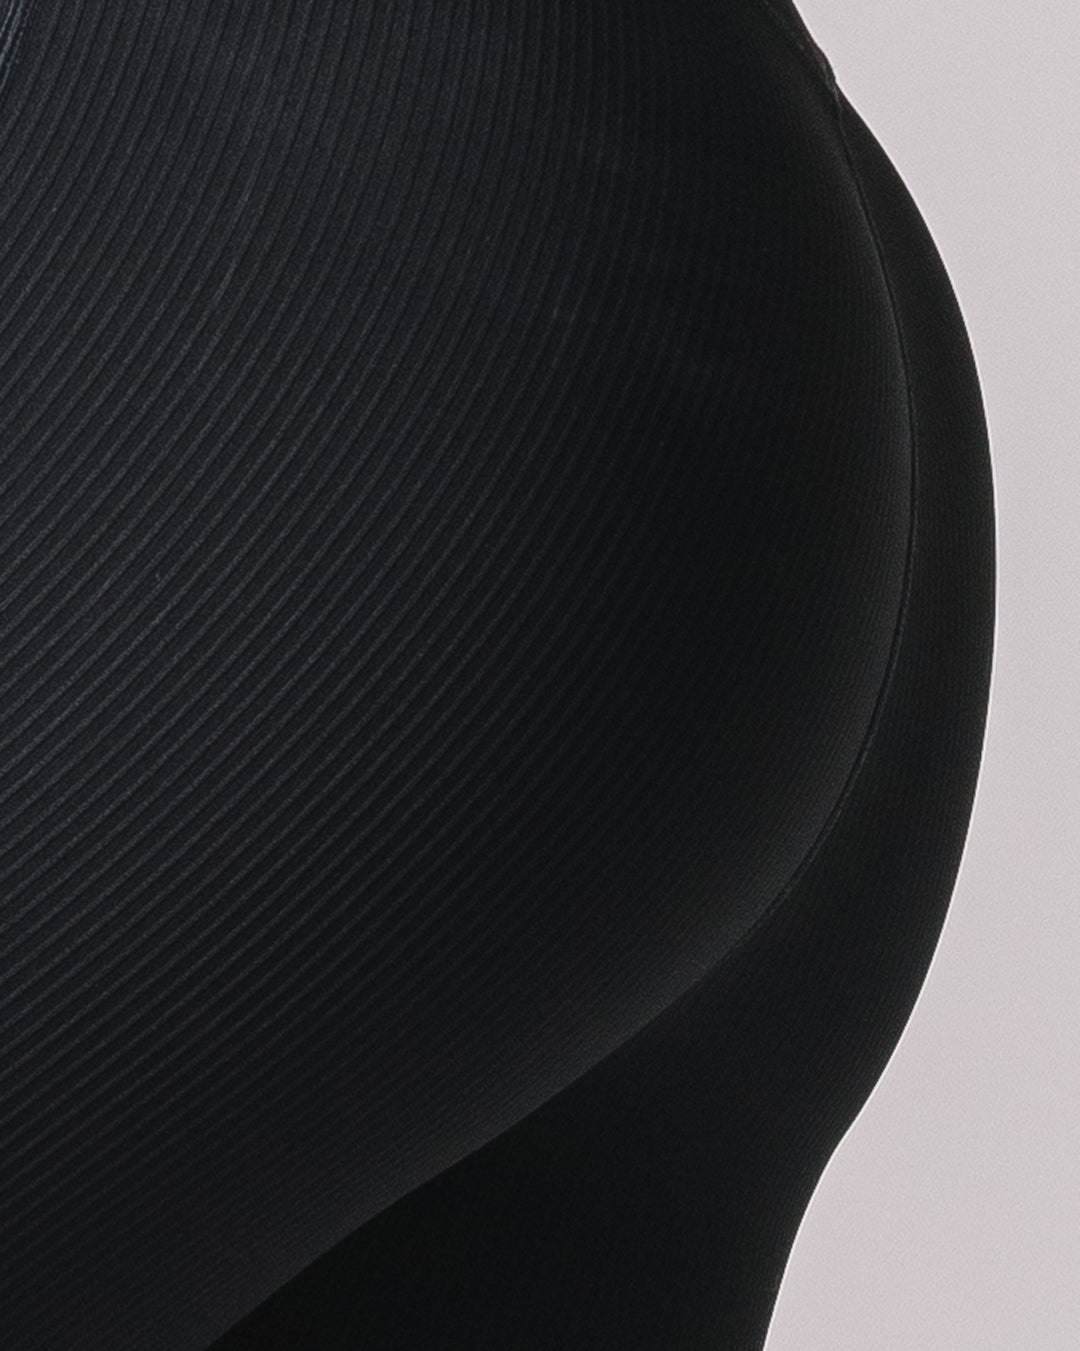 kadyluxe-womens-pocket-ilegging-black-closeup-texture